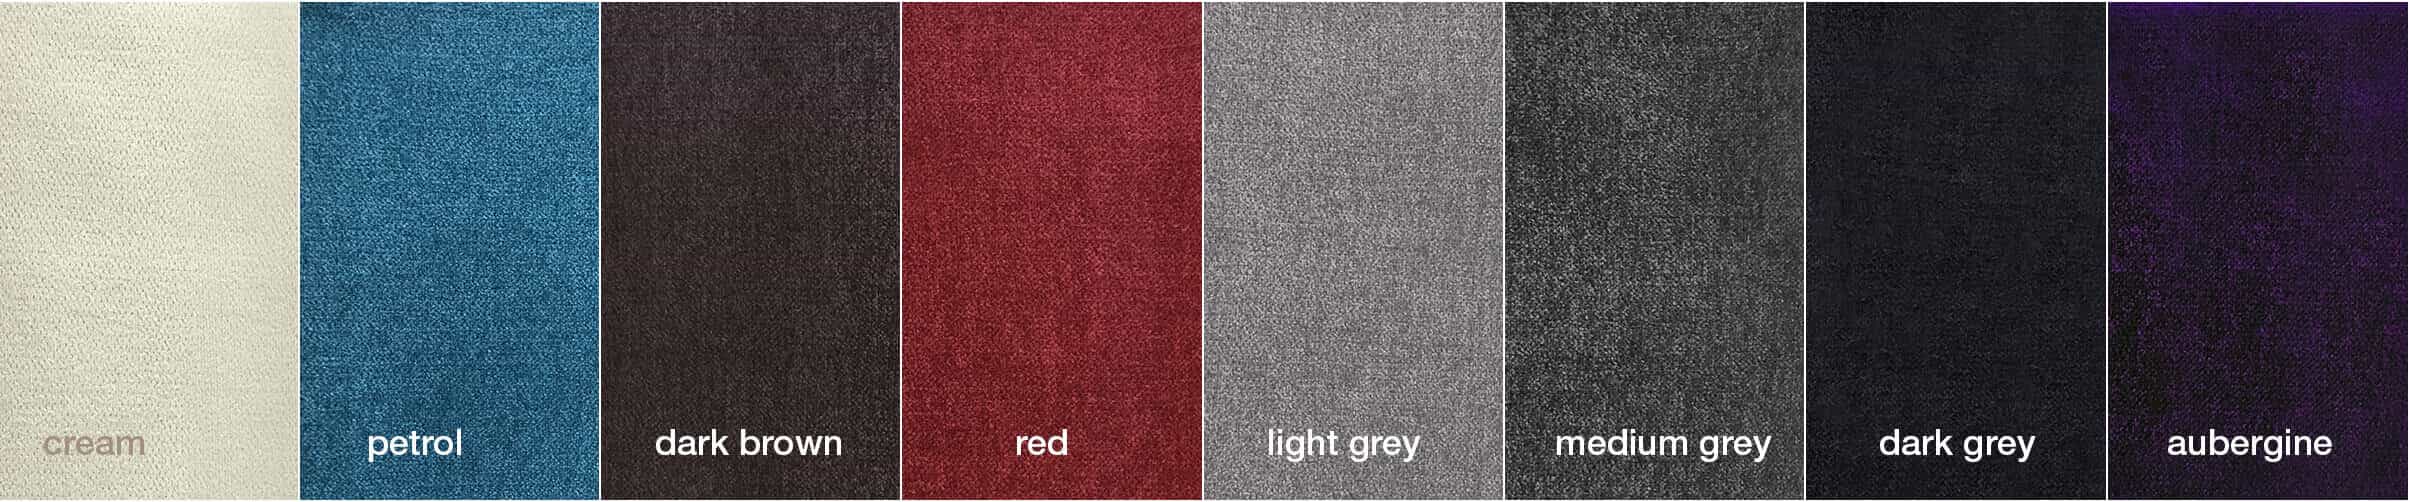 Microfiber colors: brown, light grey, medium grey, cream